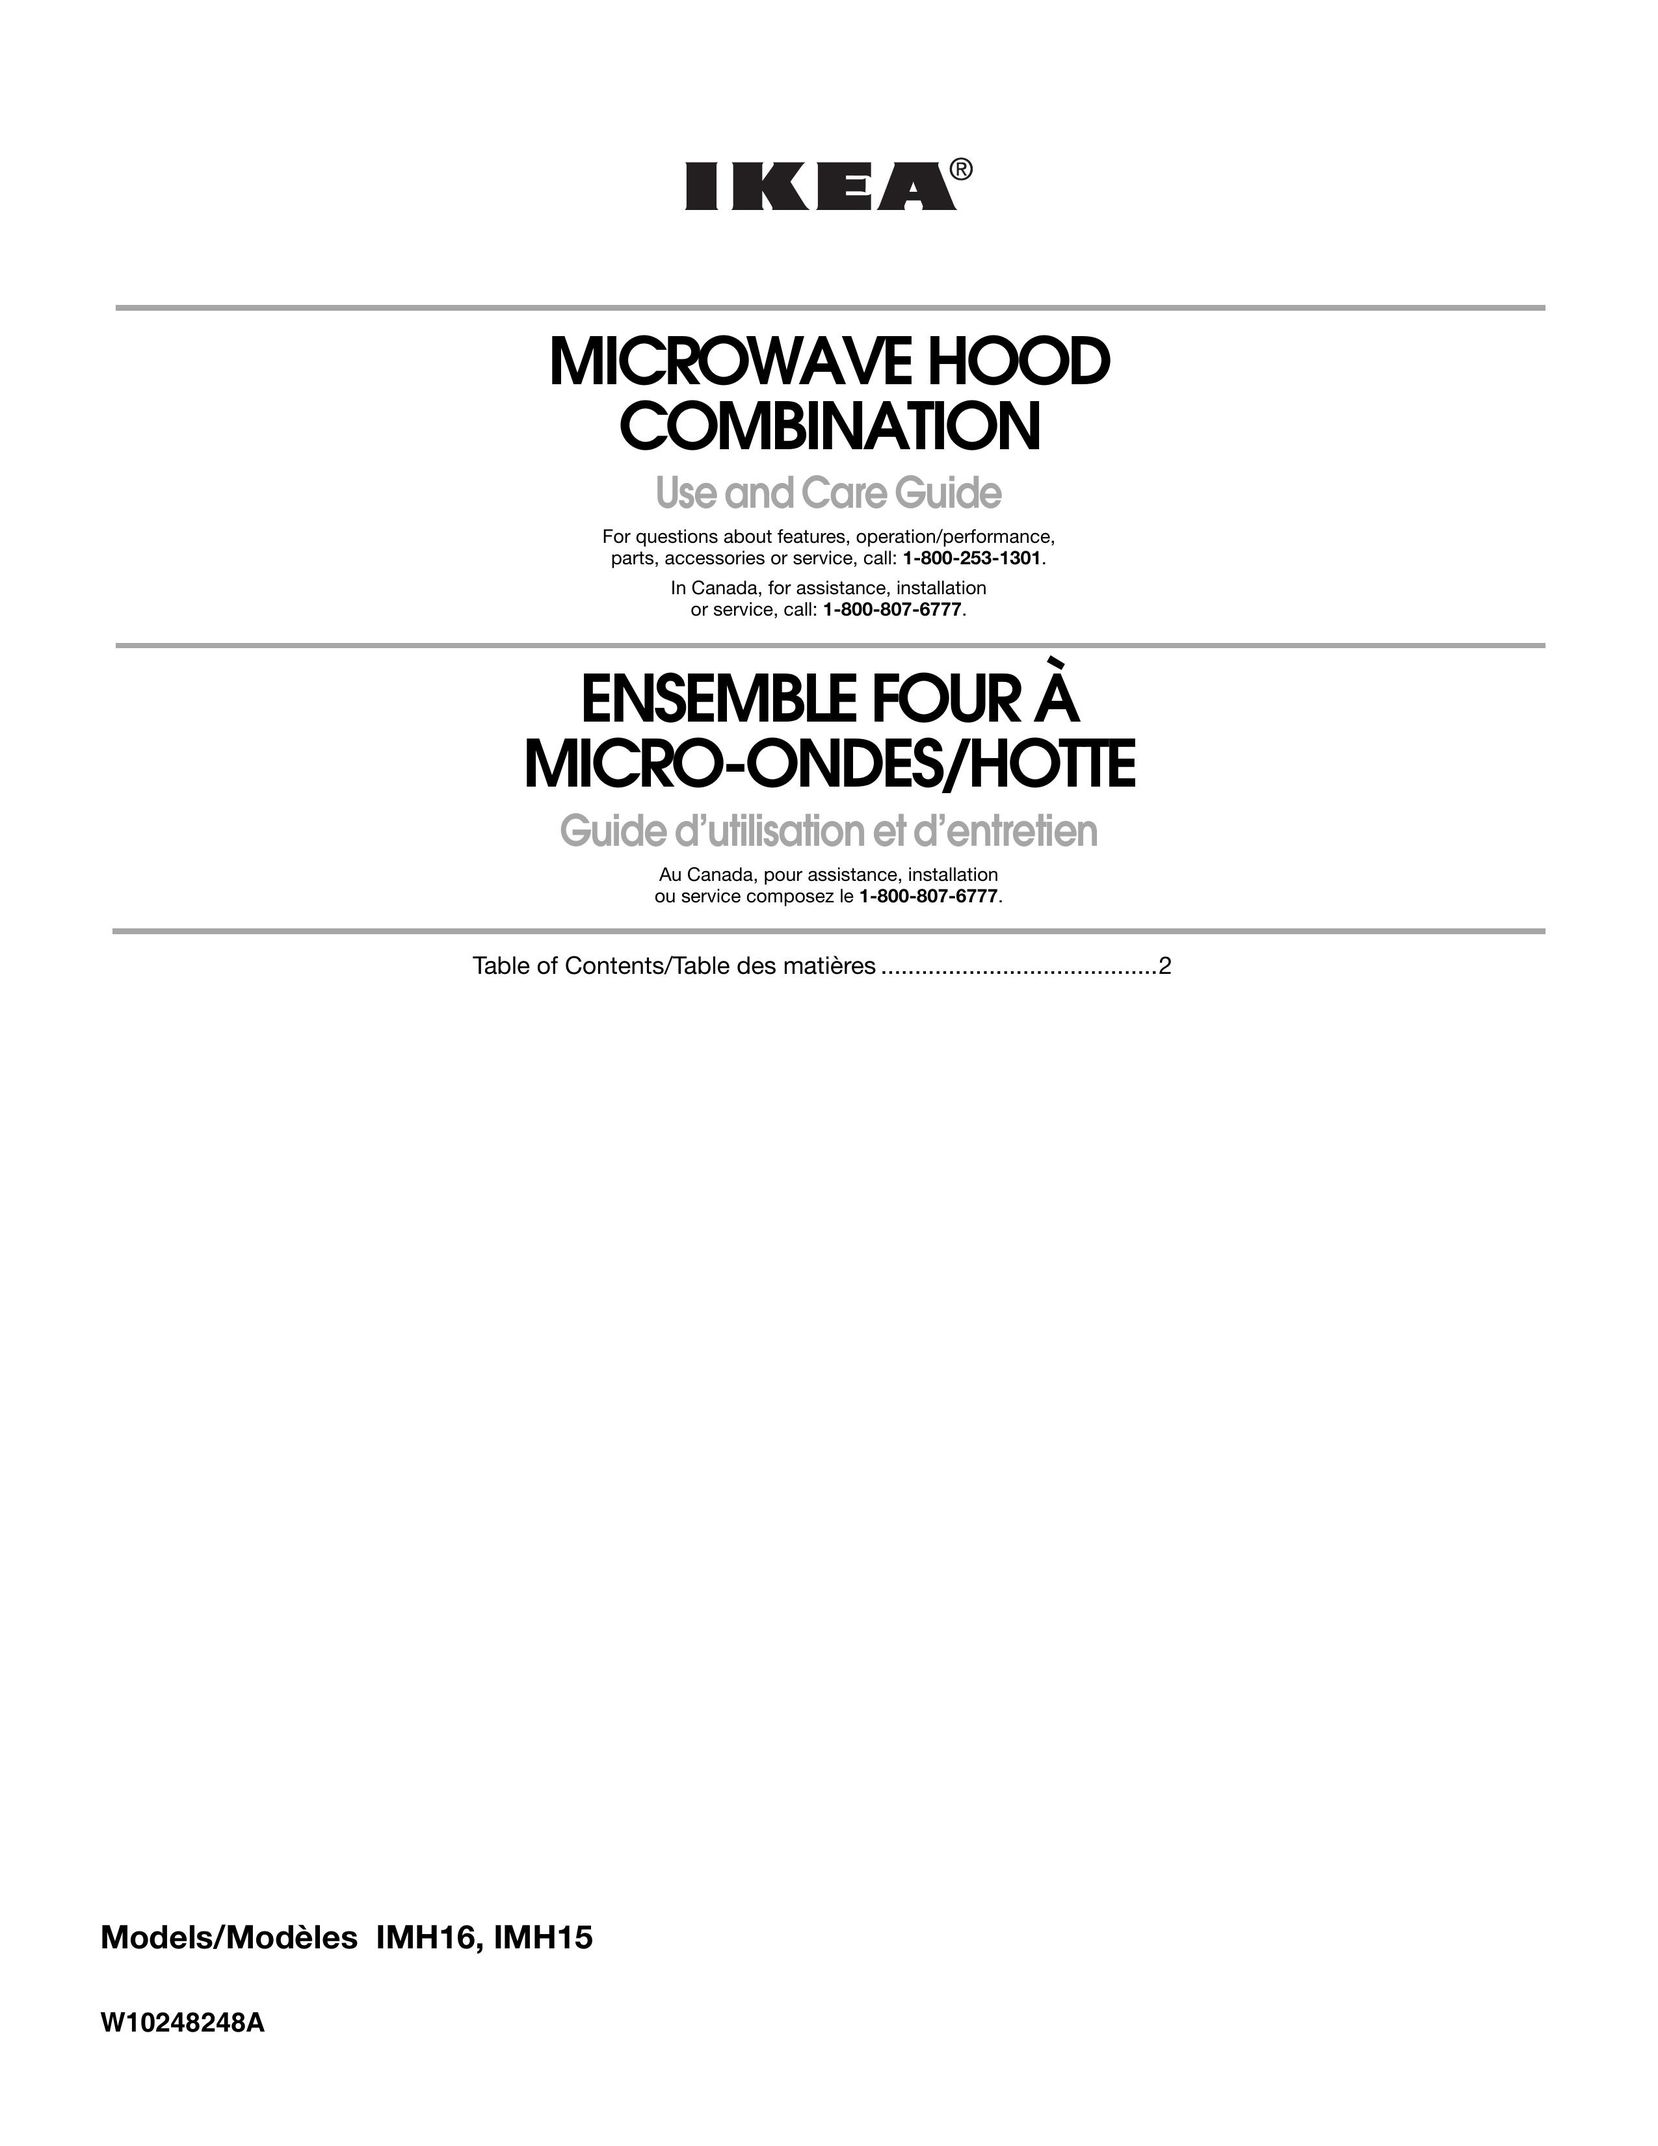 IKEA IMH16 Microwave Oven User Manual